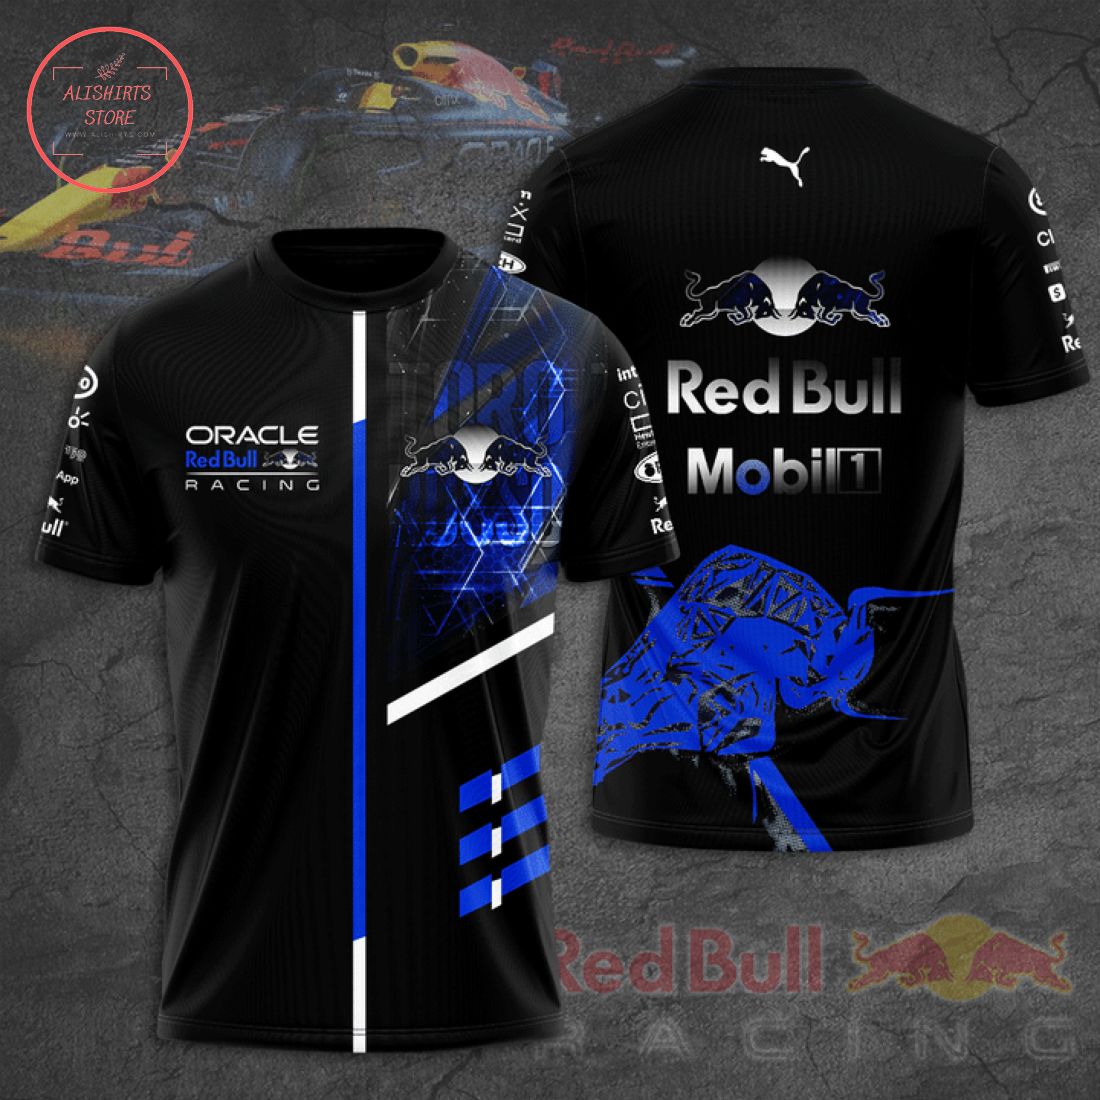 Oracle Red Bull Racing Team Black T-Shirt